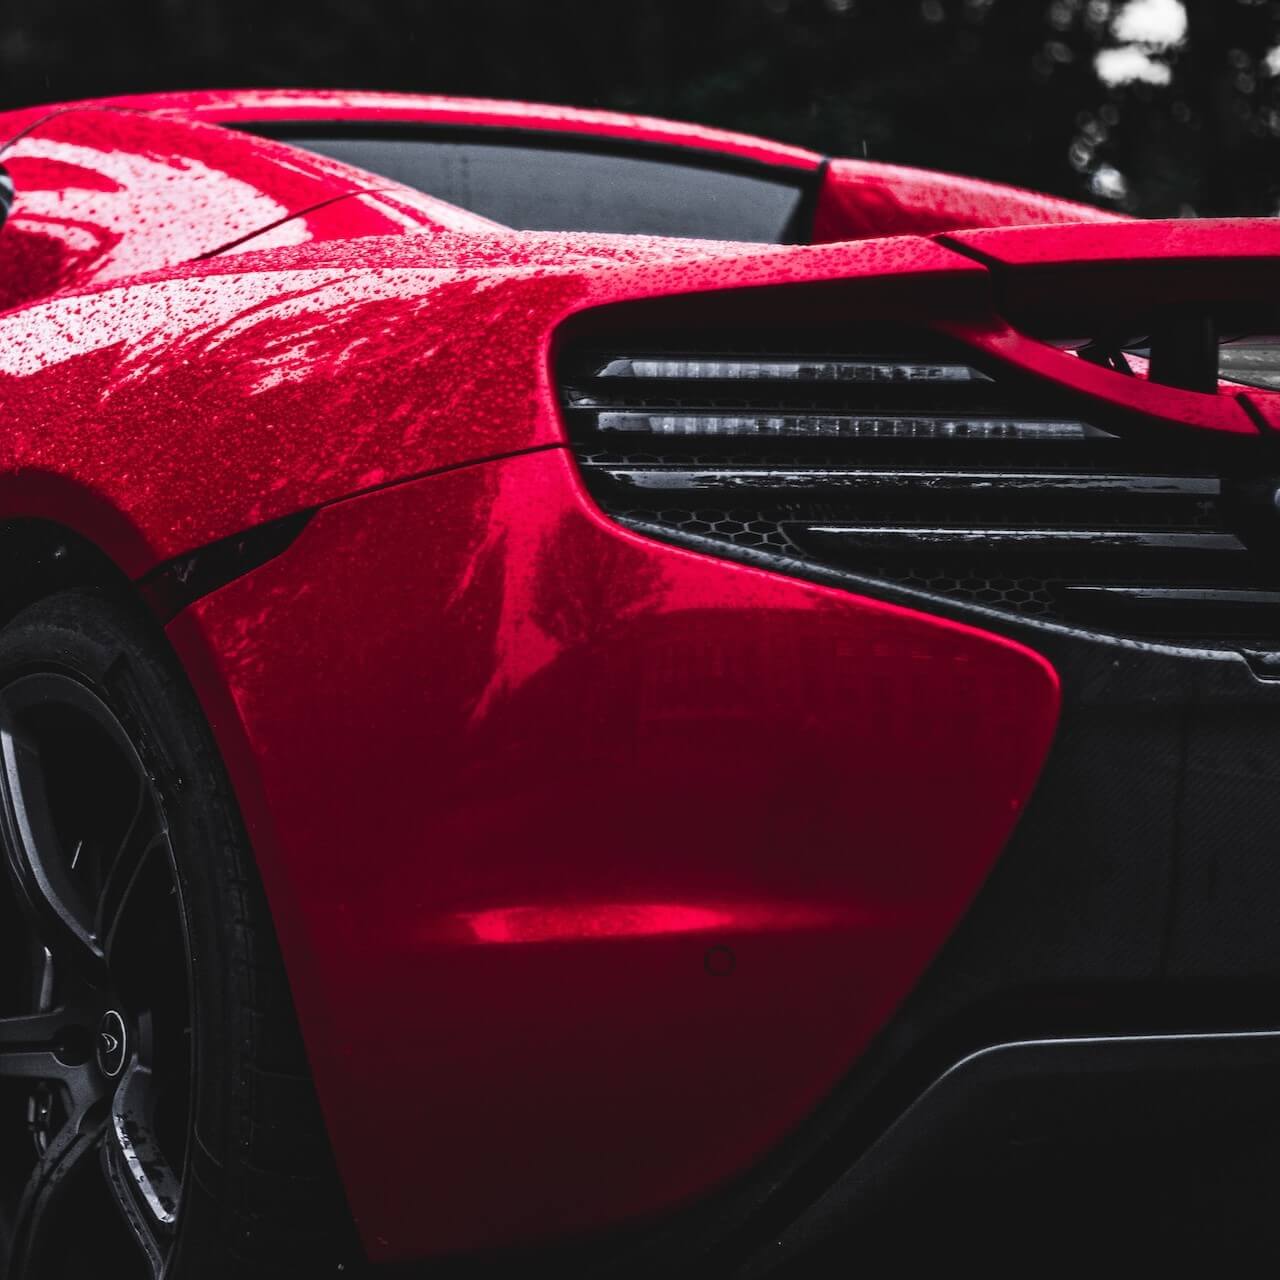 Bumper view of a red car